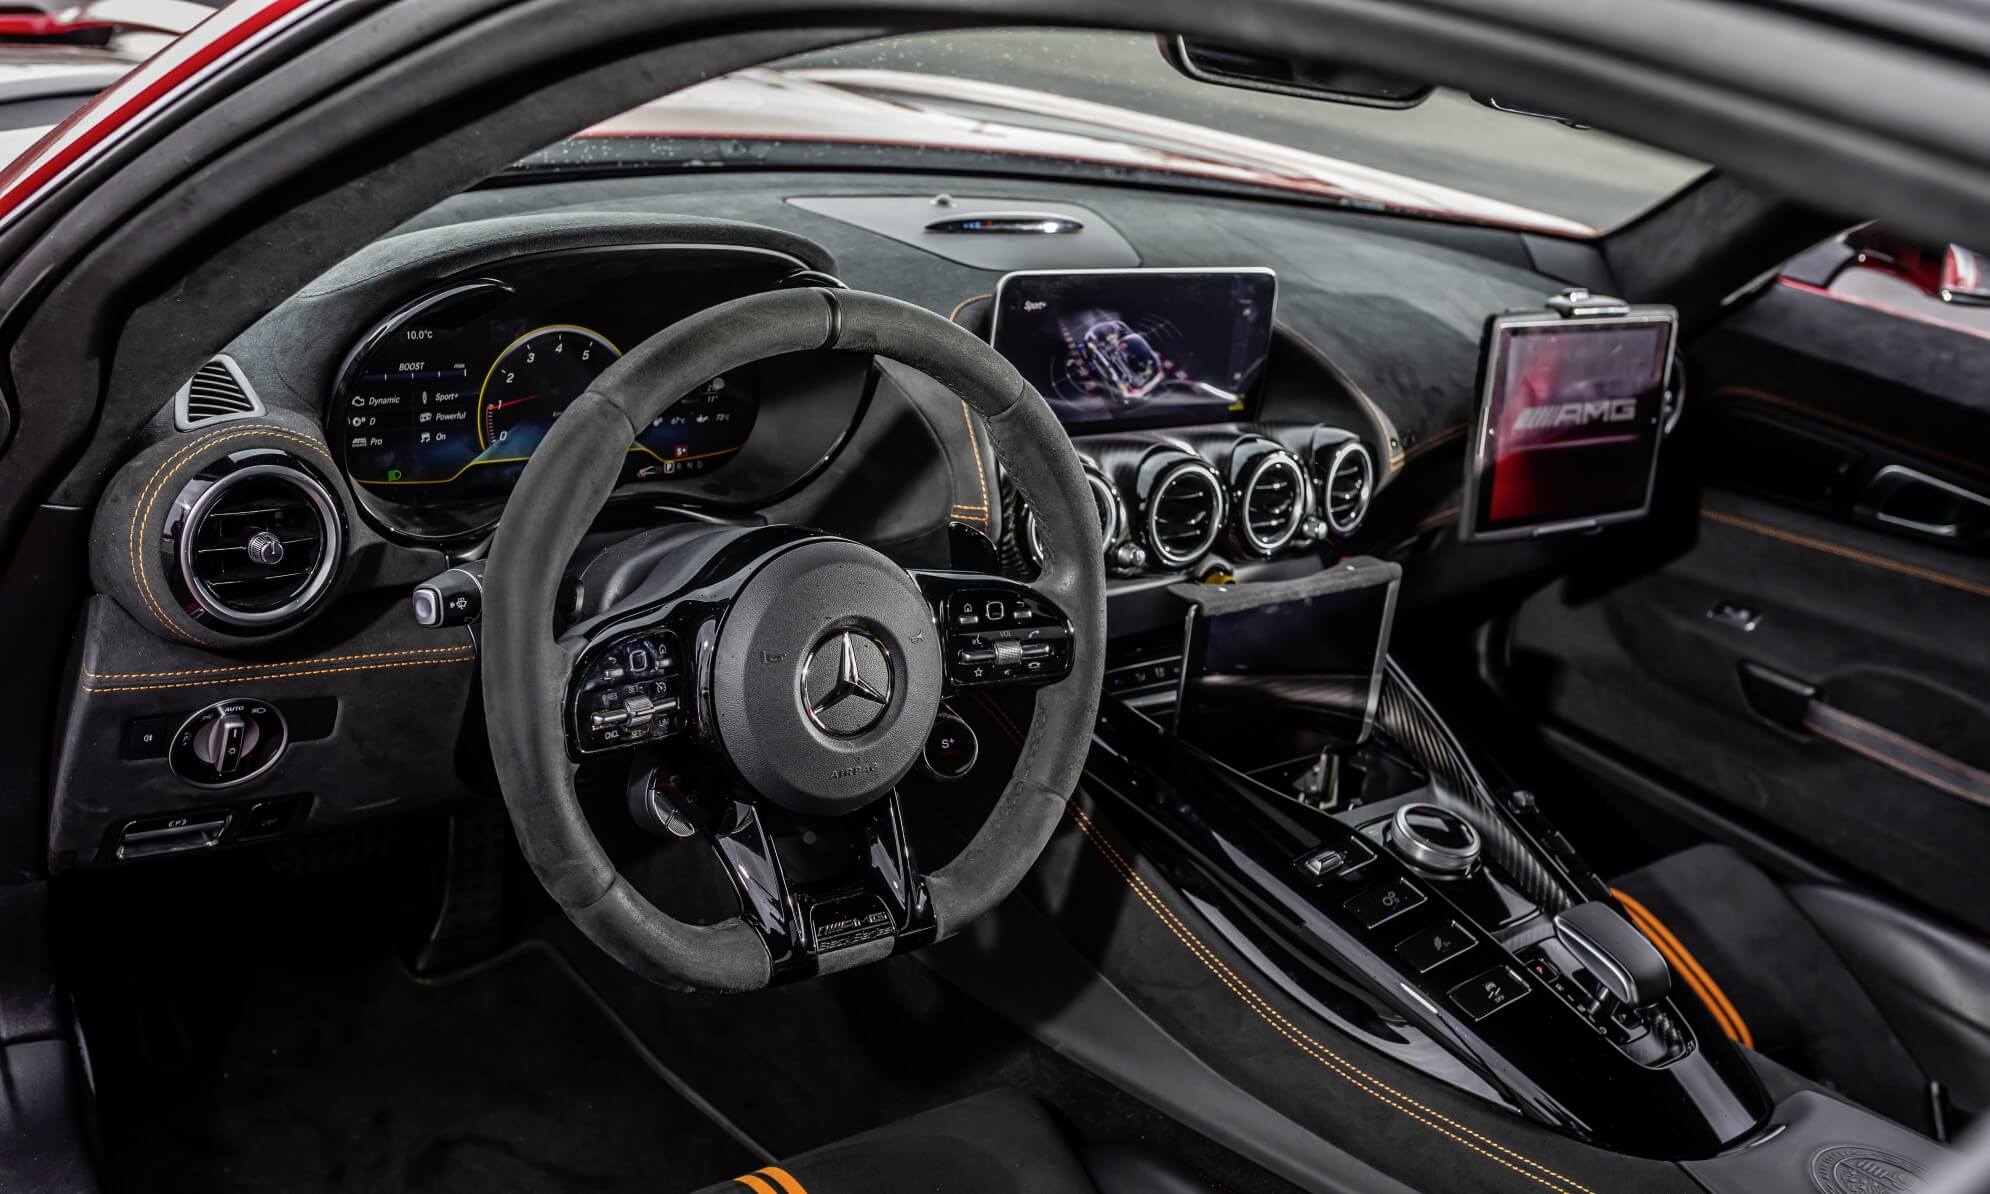 New Mercedes-AMG F1 Safety Car interior